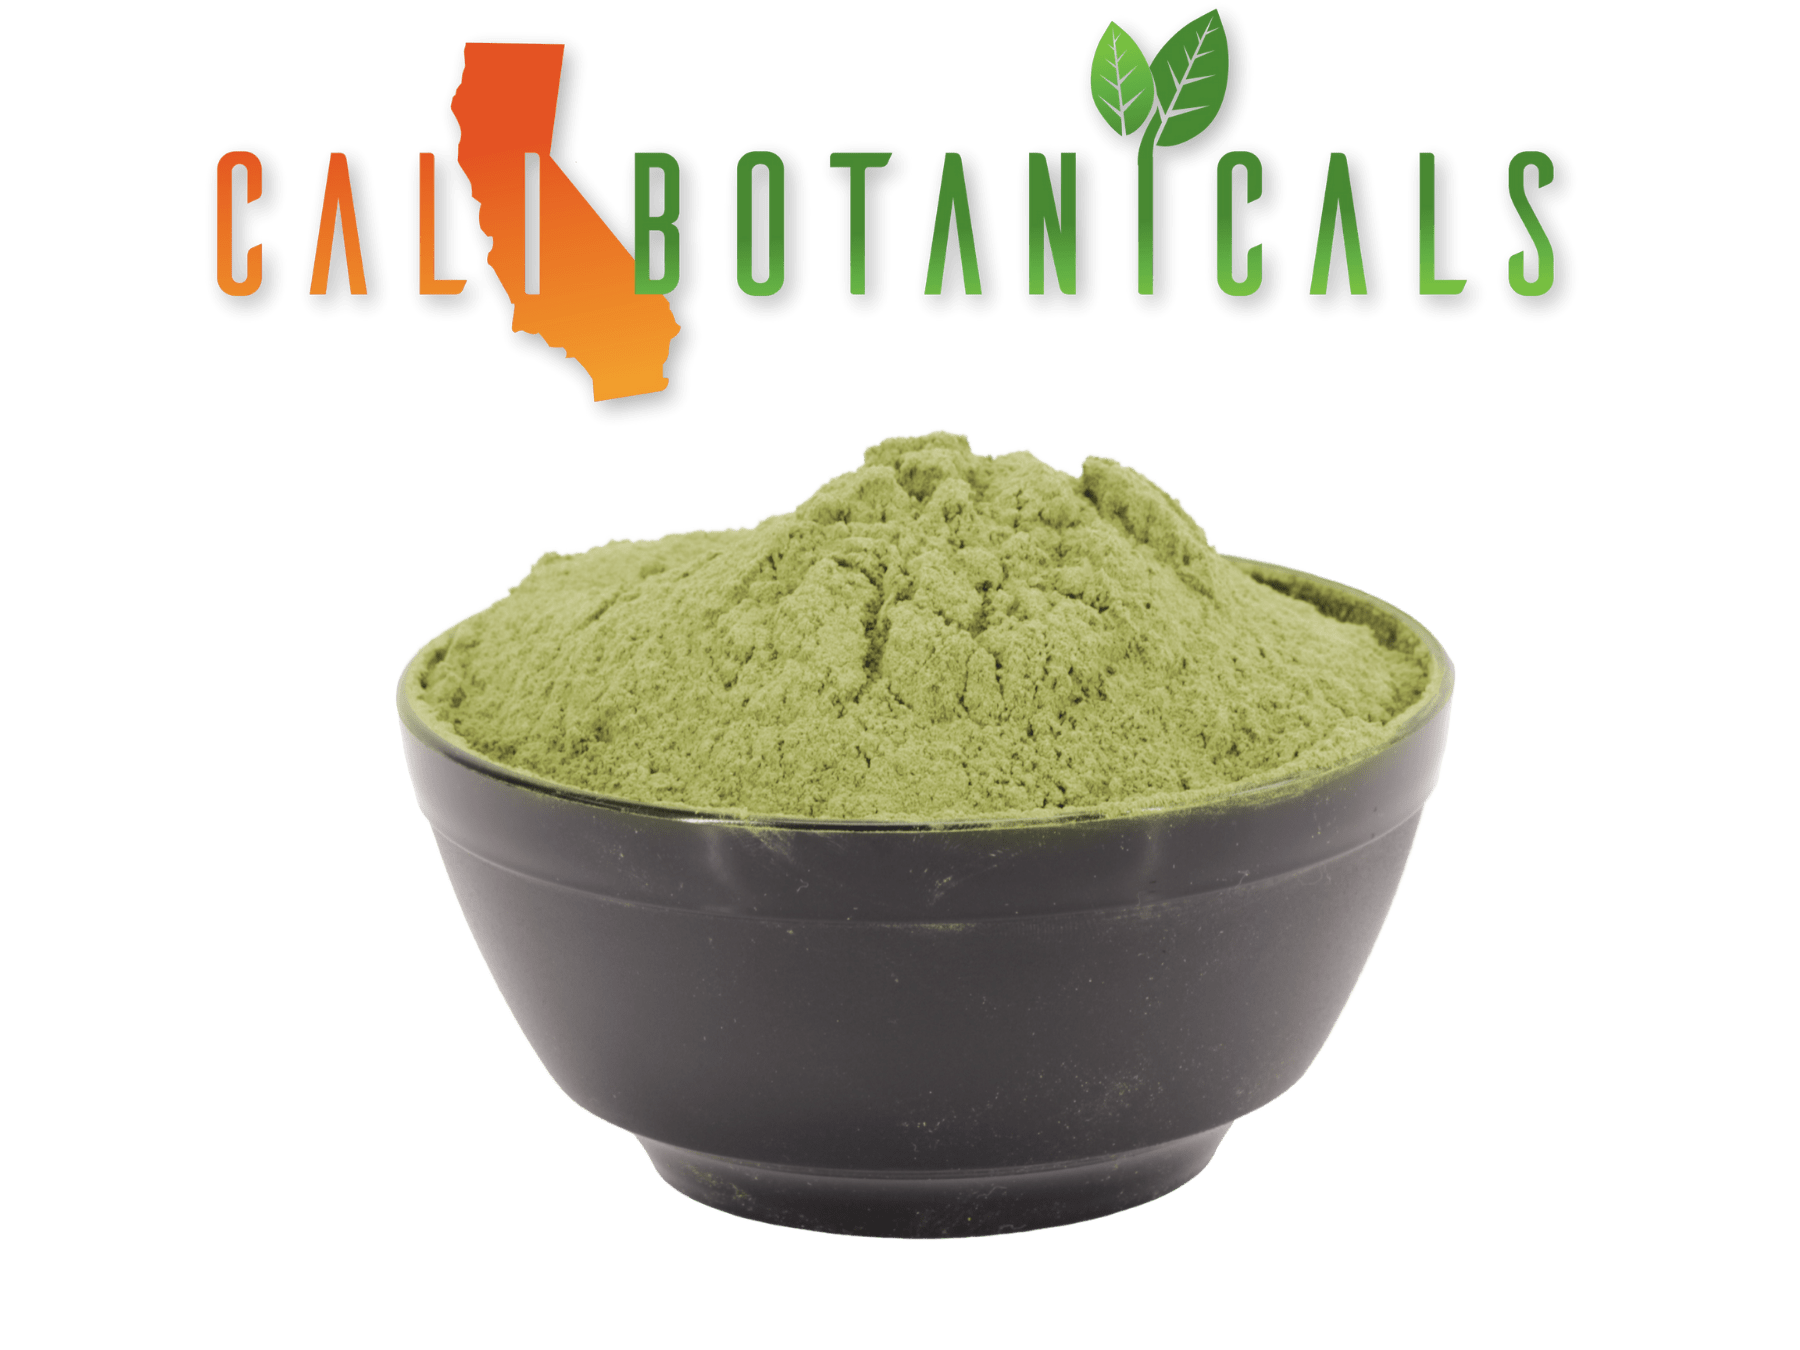 Buy Green Malay Kratom Powder at Cali Botanicals Kratom